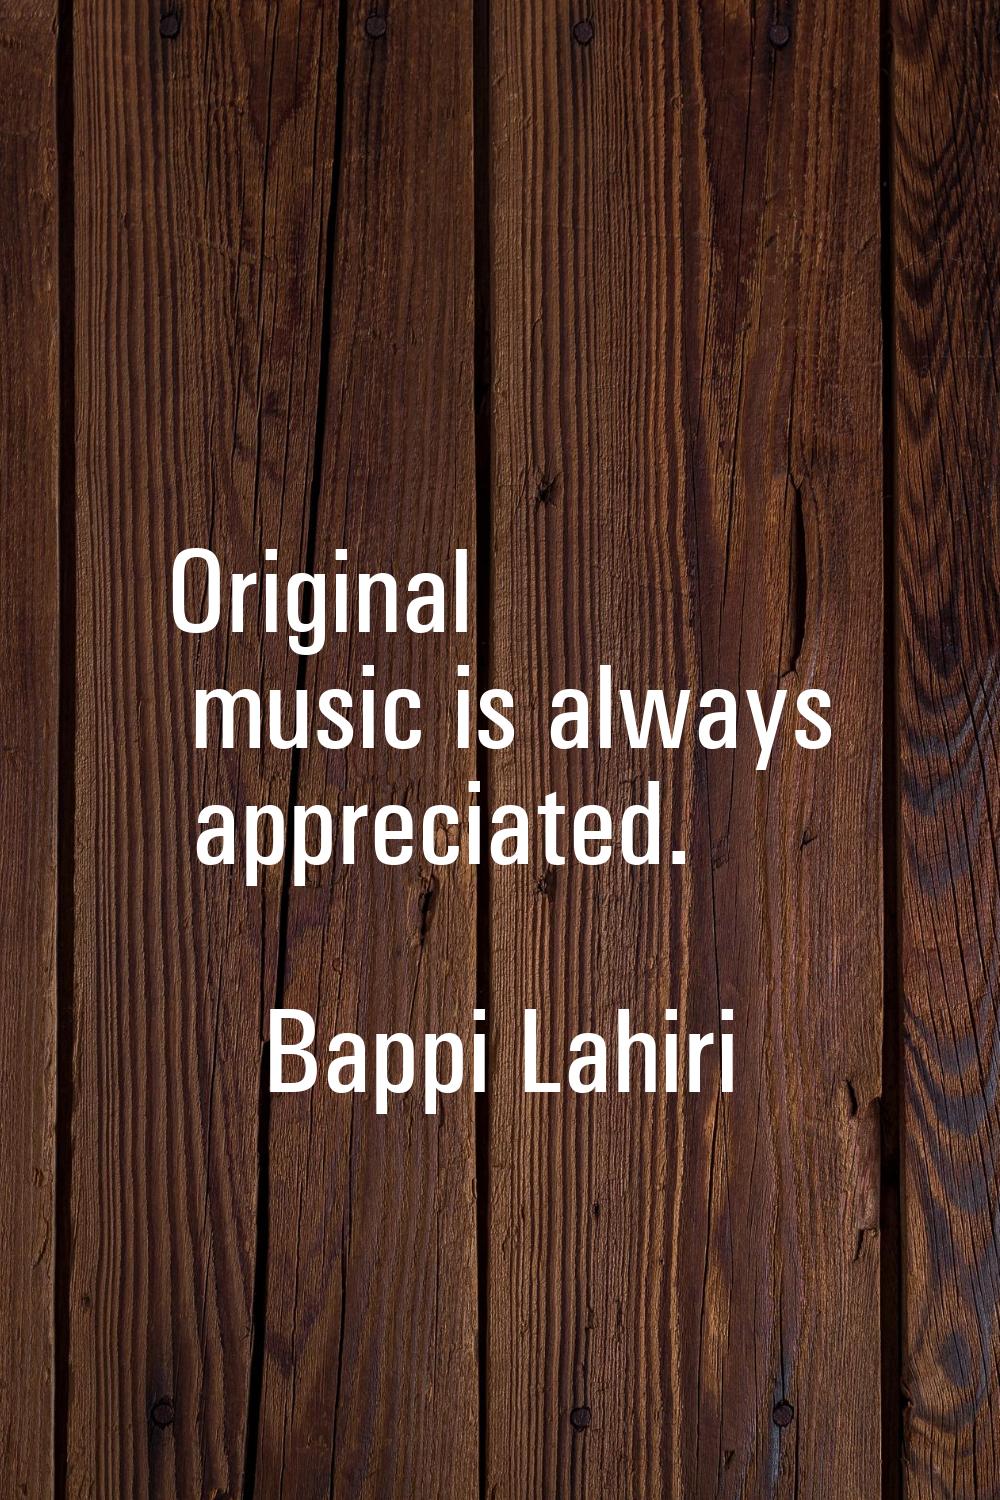 Original music is always appreciated.